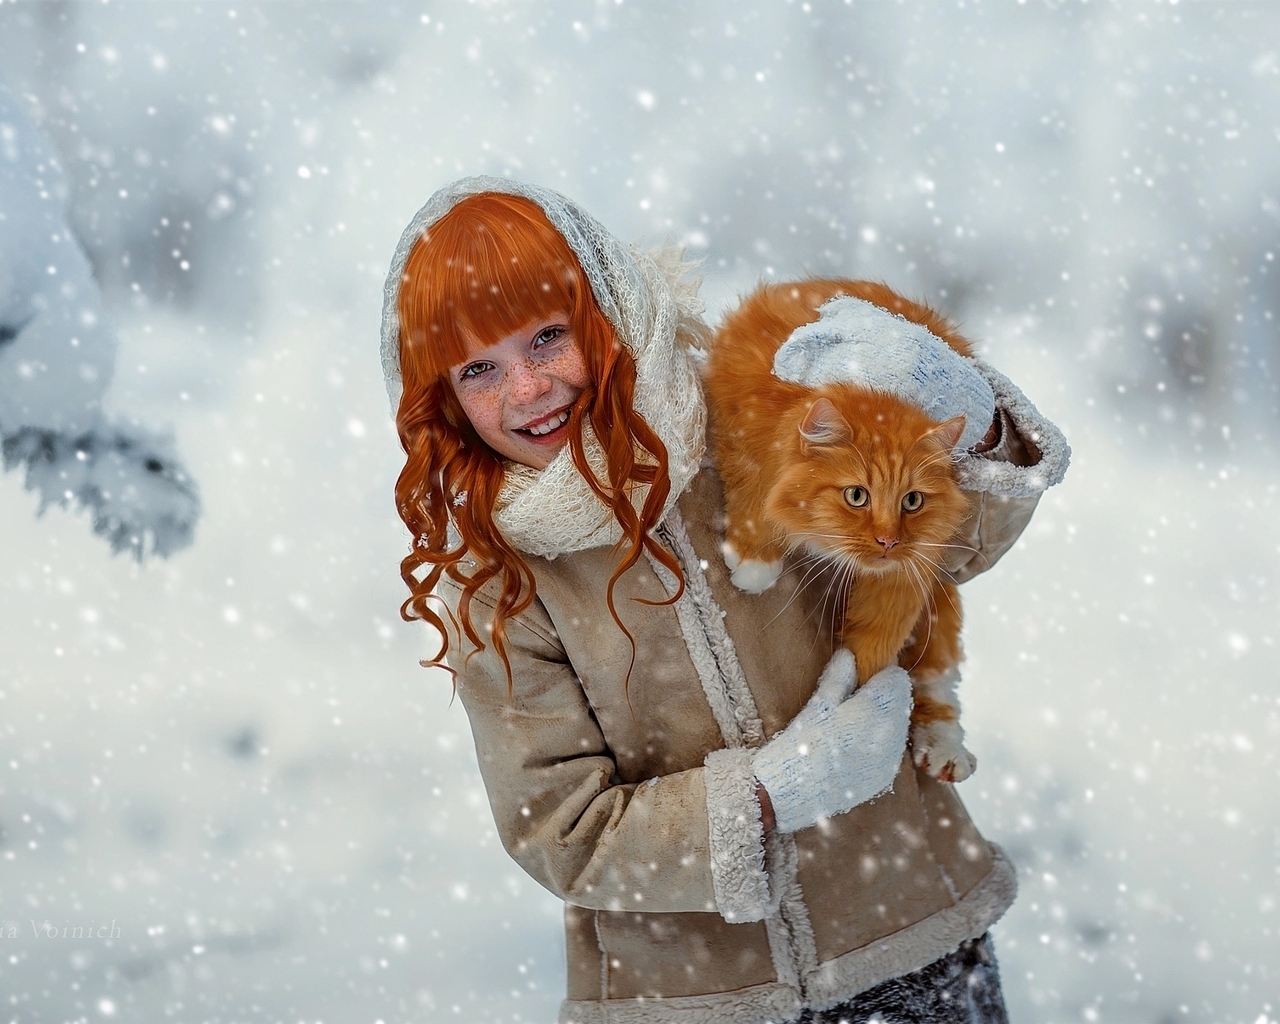 Картинка: Девочка, кот, рыжий, зима, снег, улыбка